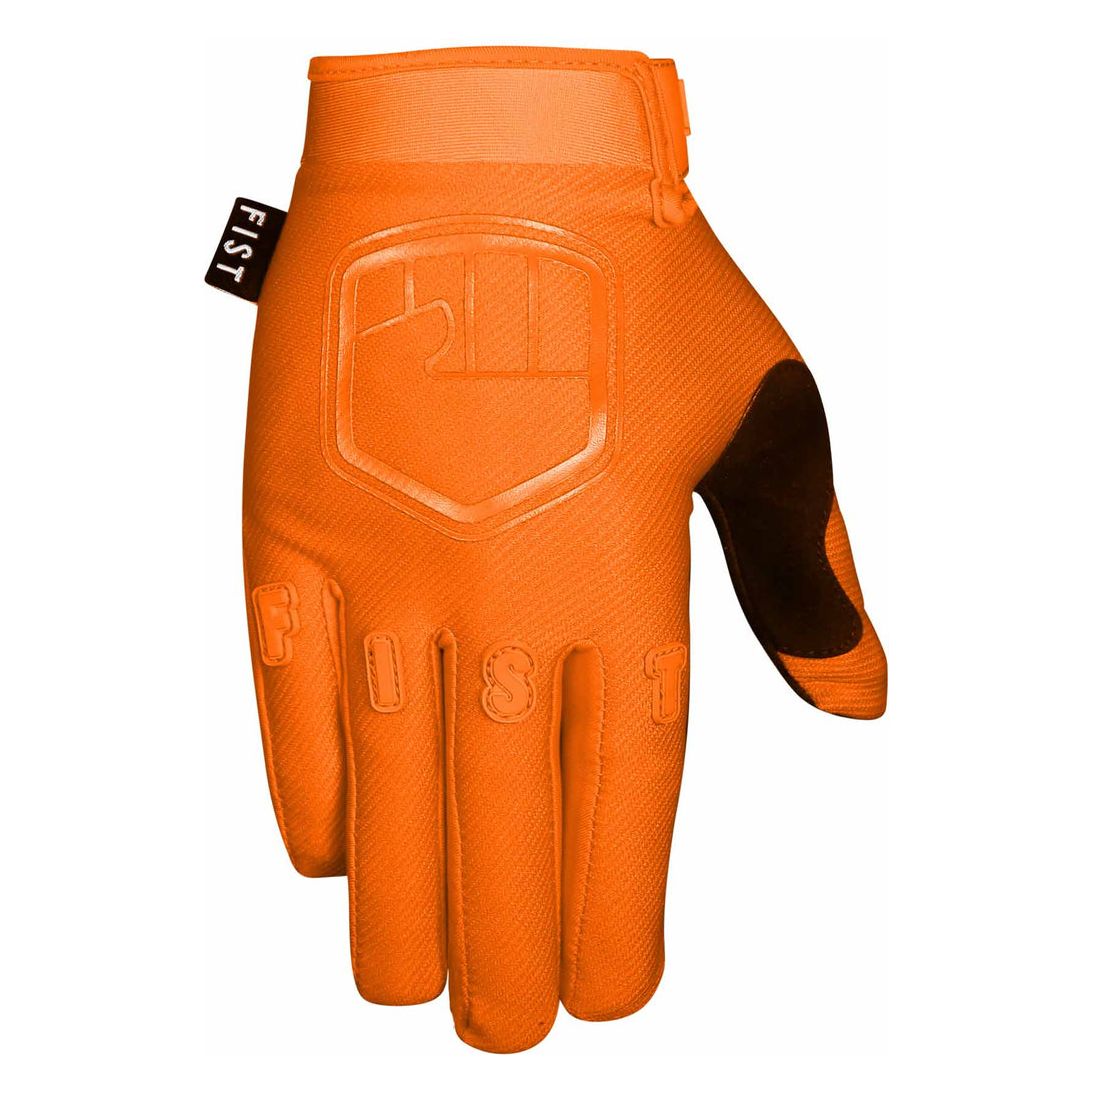 Fist Handwear Stocker Youth Strapped Glove - Youth S - Orange Stocker - Image 1